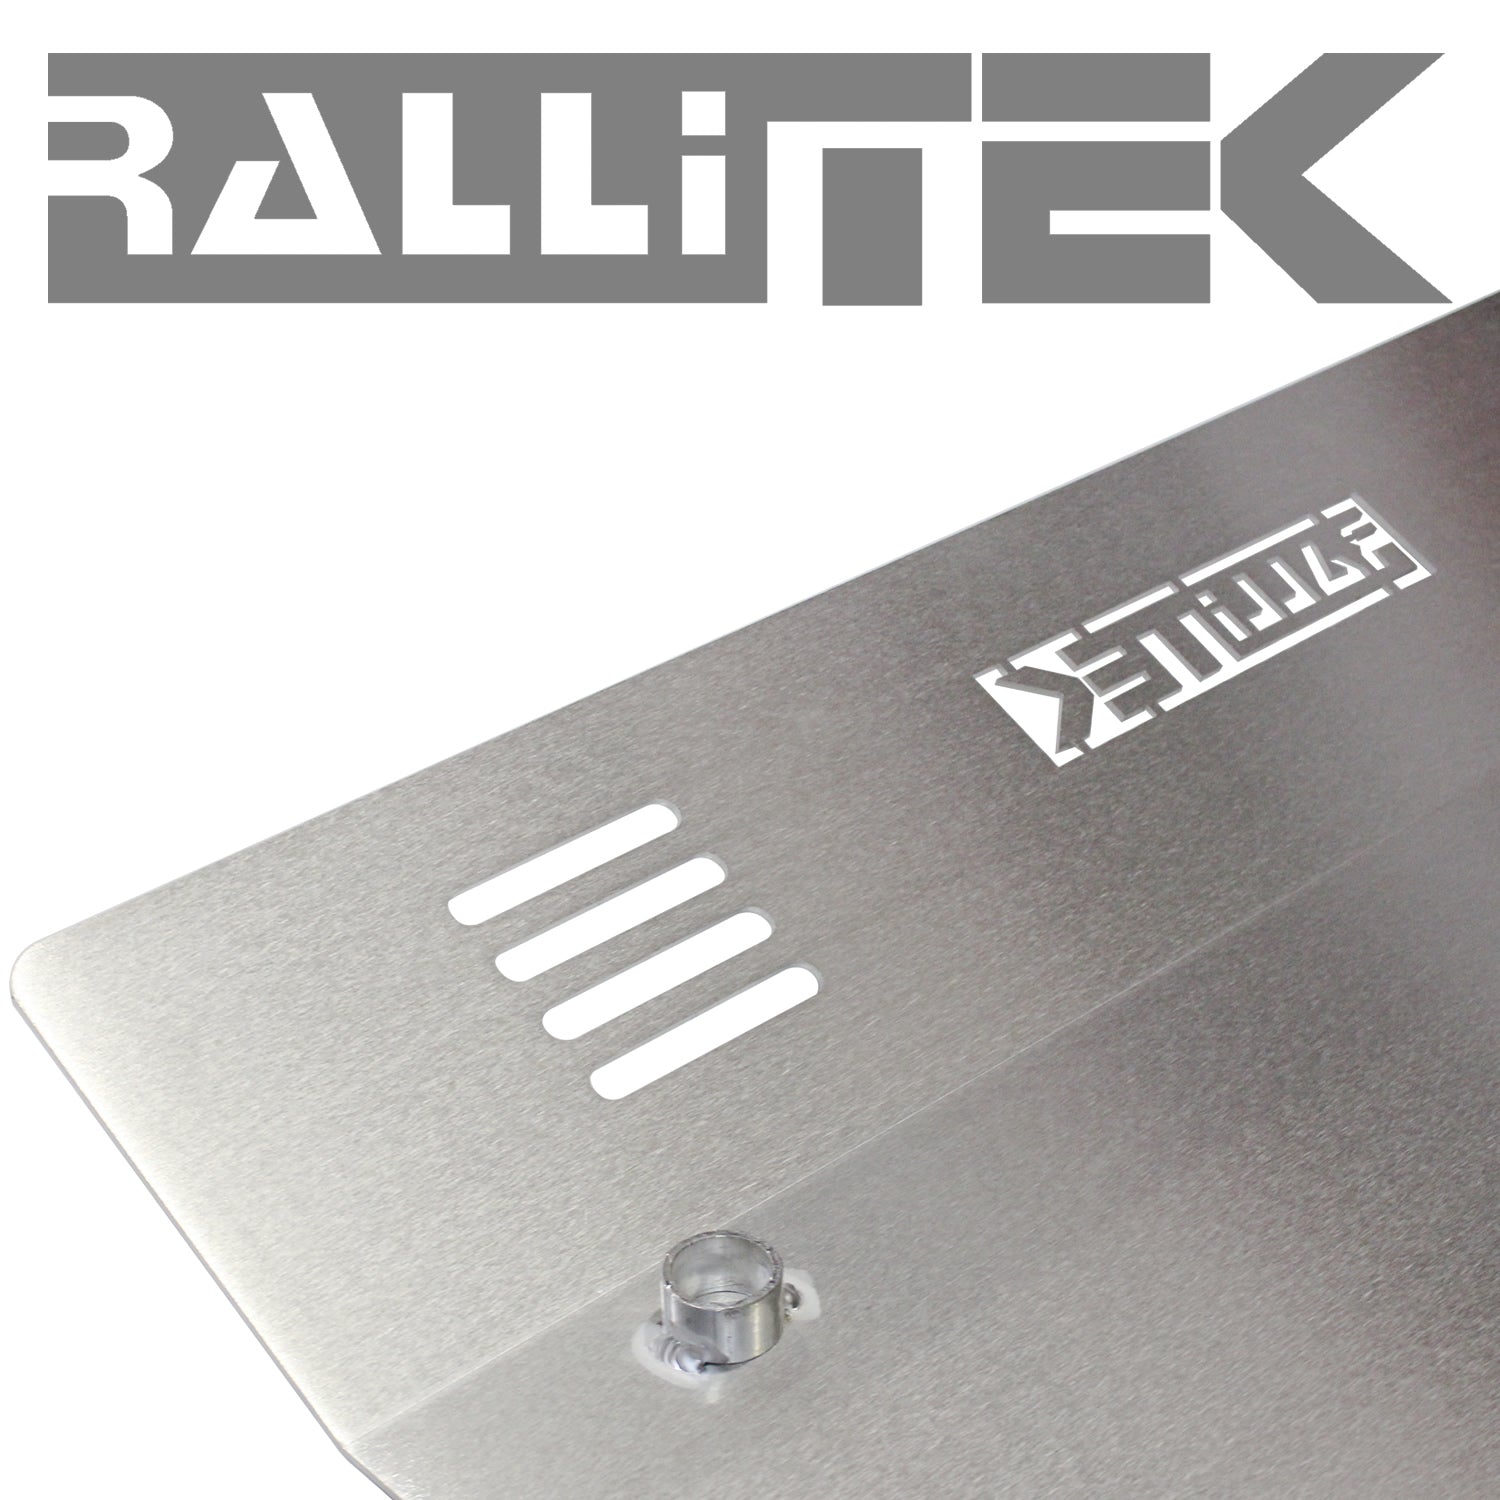 RalliTEK Front Skid Plate - Forester 2019-2020